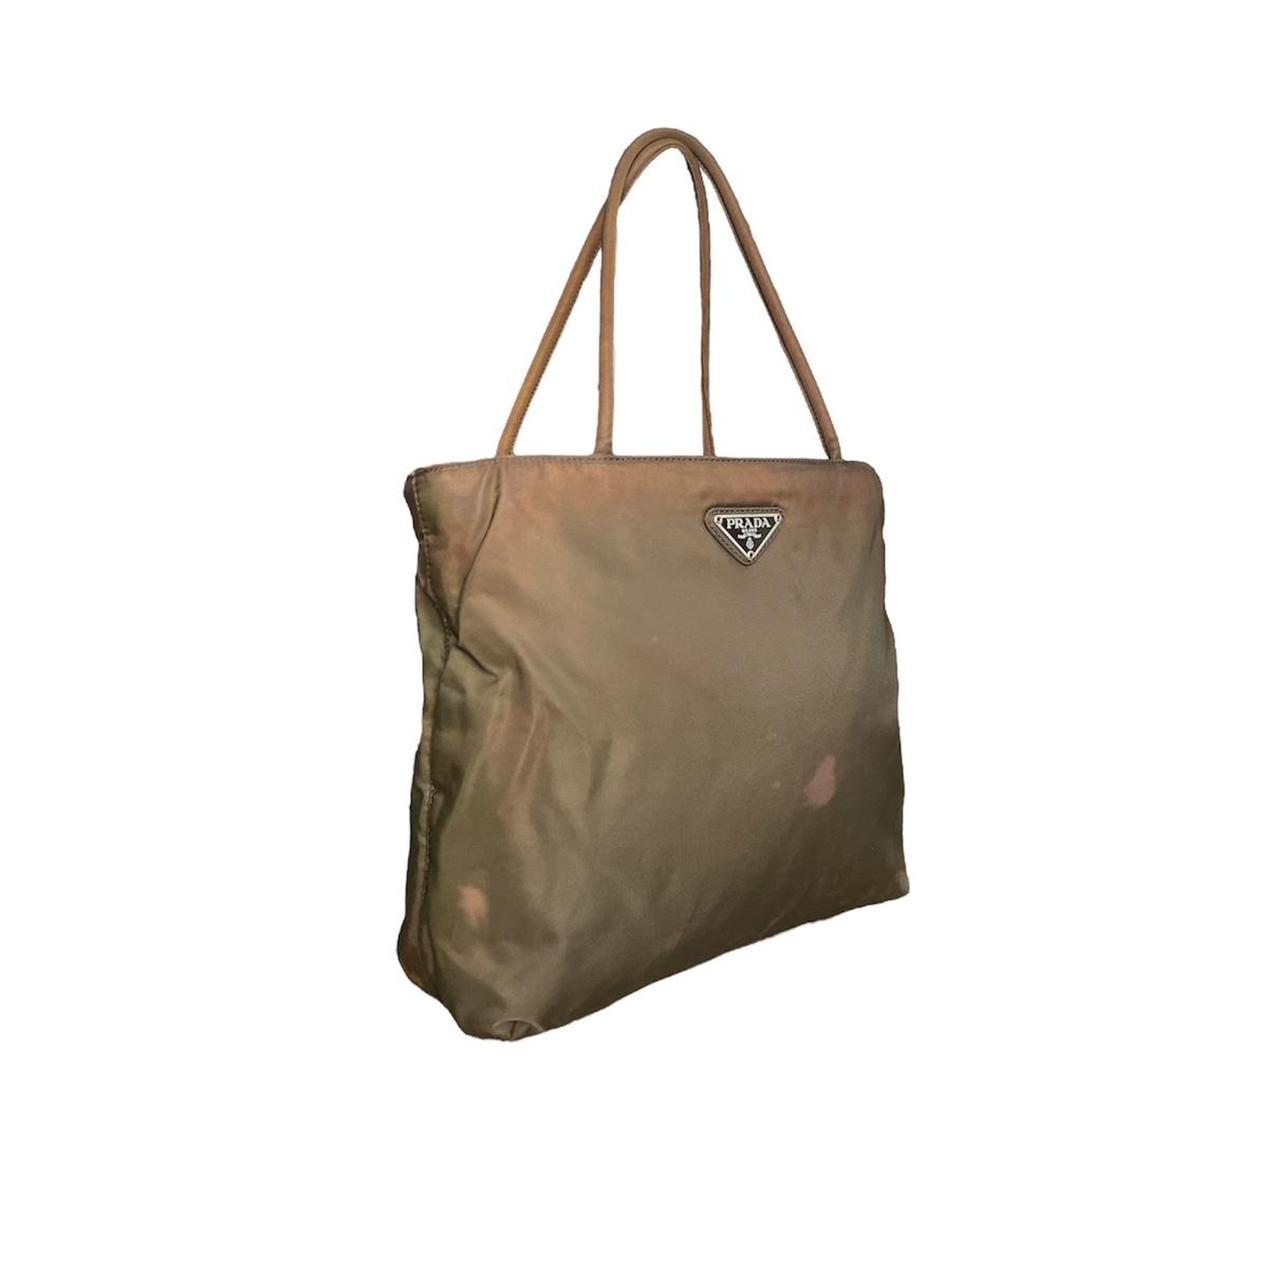 vintage prada nylon shoulder bag rare tan / light - Depop